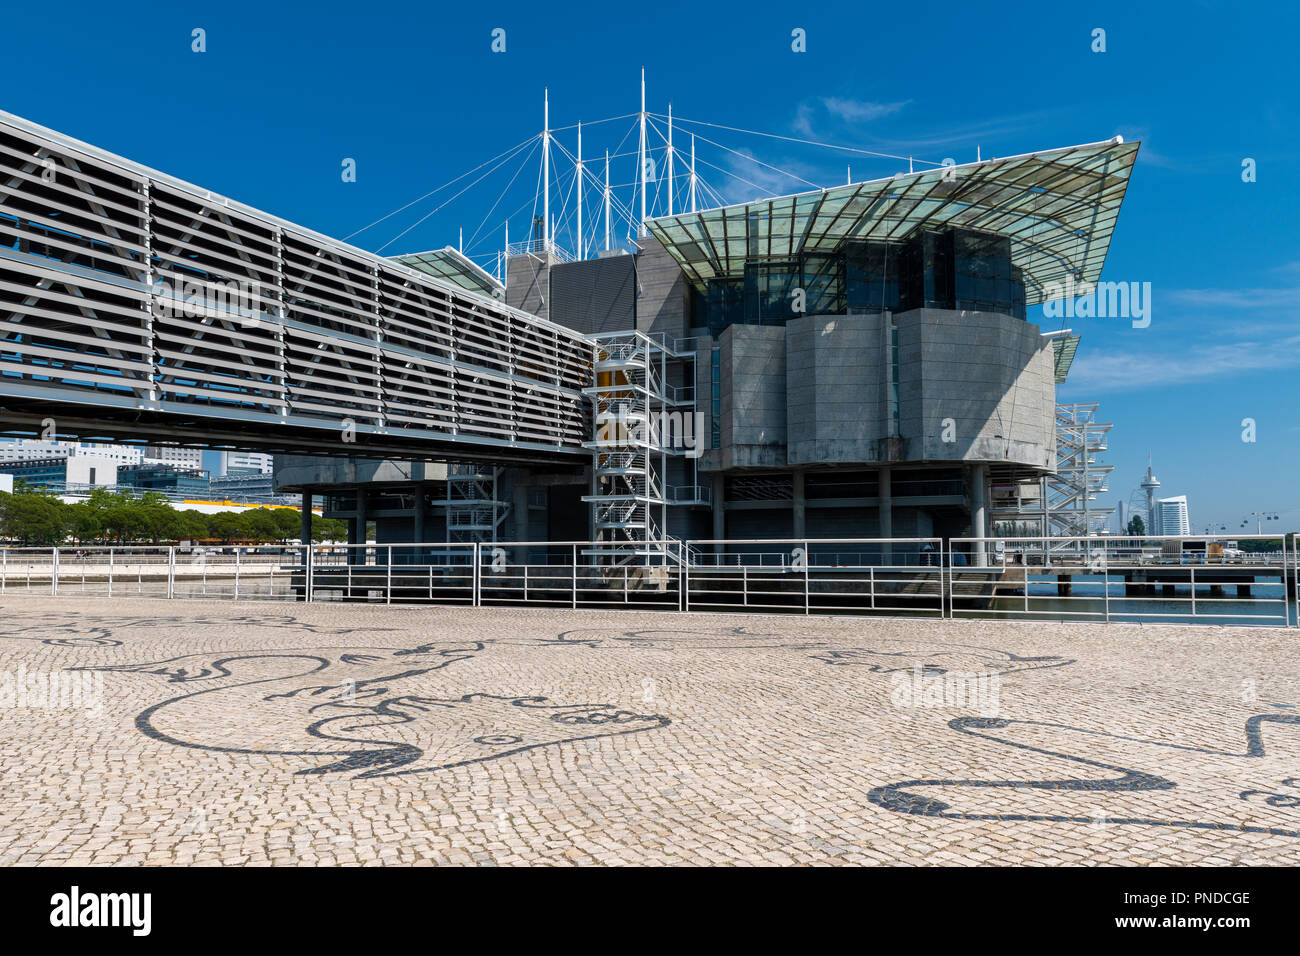 View of the Oceanario de Lisboa (Lisbon’s Aquarium) in the city of Lisbon, Portugal. Stock Photo